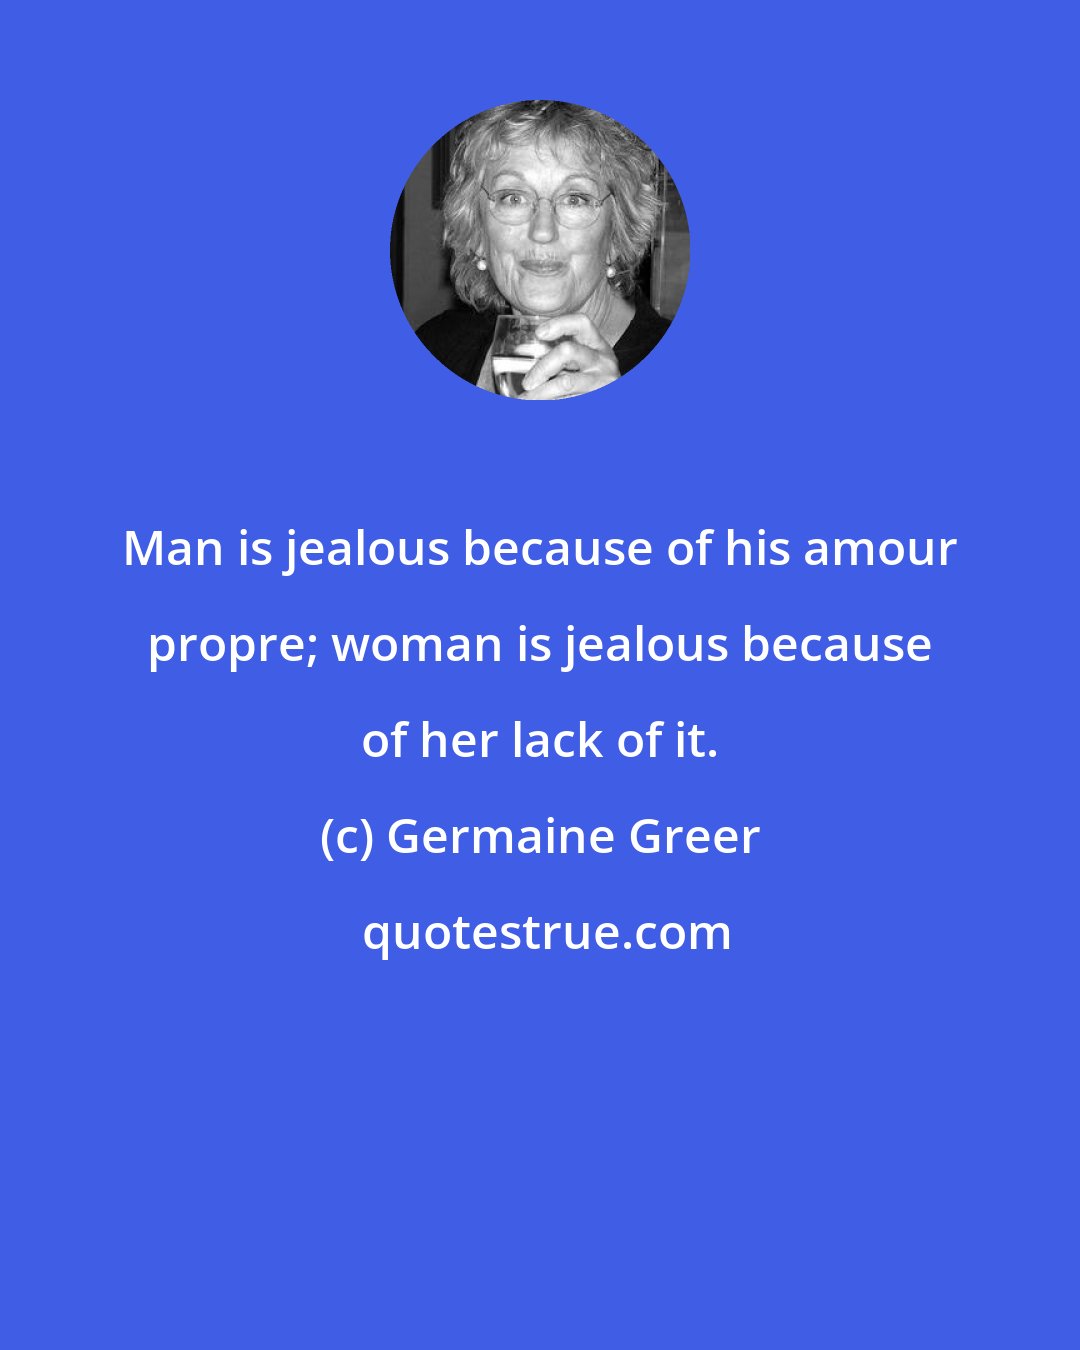 Germaine Greer: Man is jealous because of his amour propre; woman is jealous because of her lack of it.